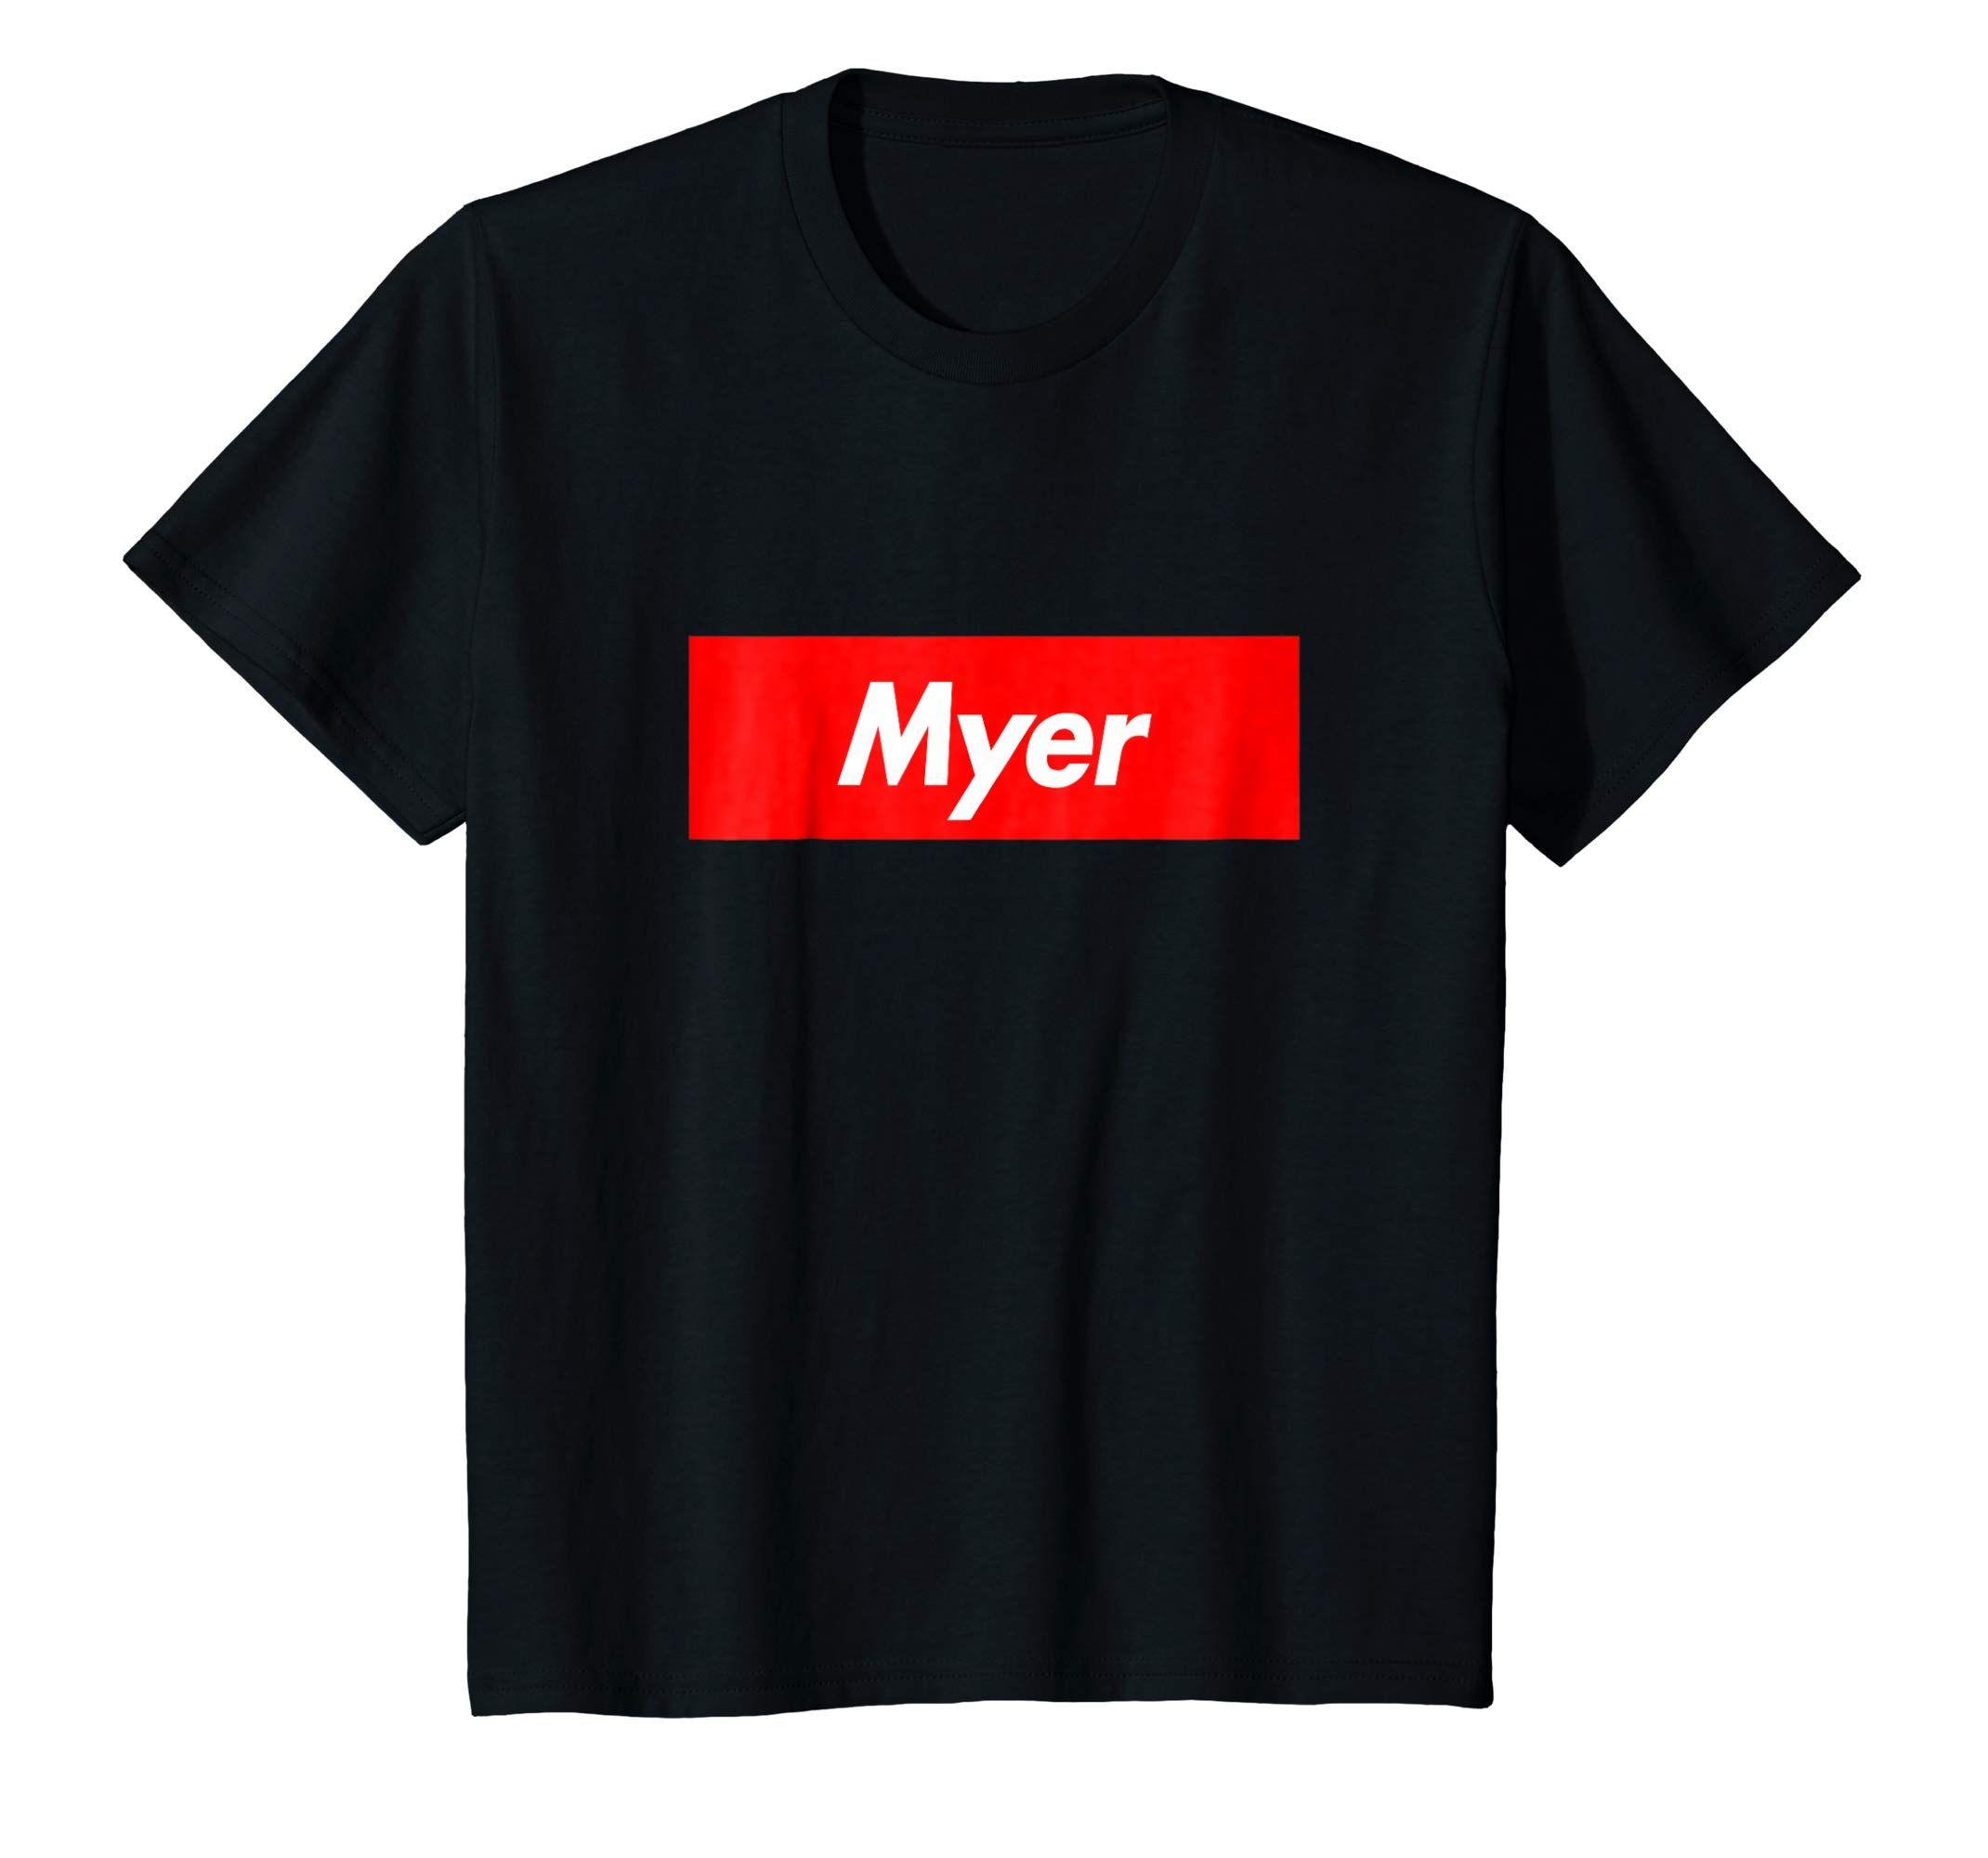 Myer Logo - Amazon.com: Myer Box First Given Name Logo Funny T-Shirt: Clothing